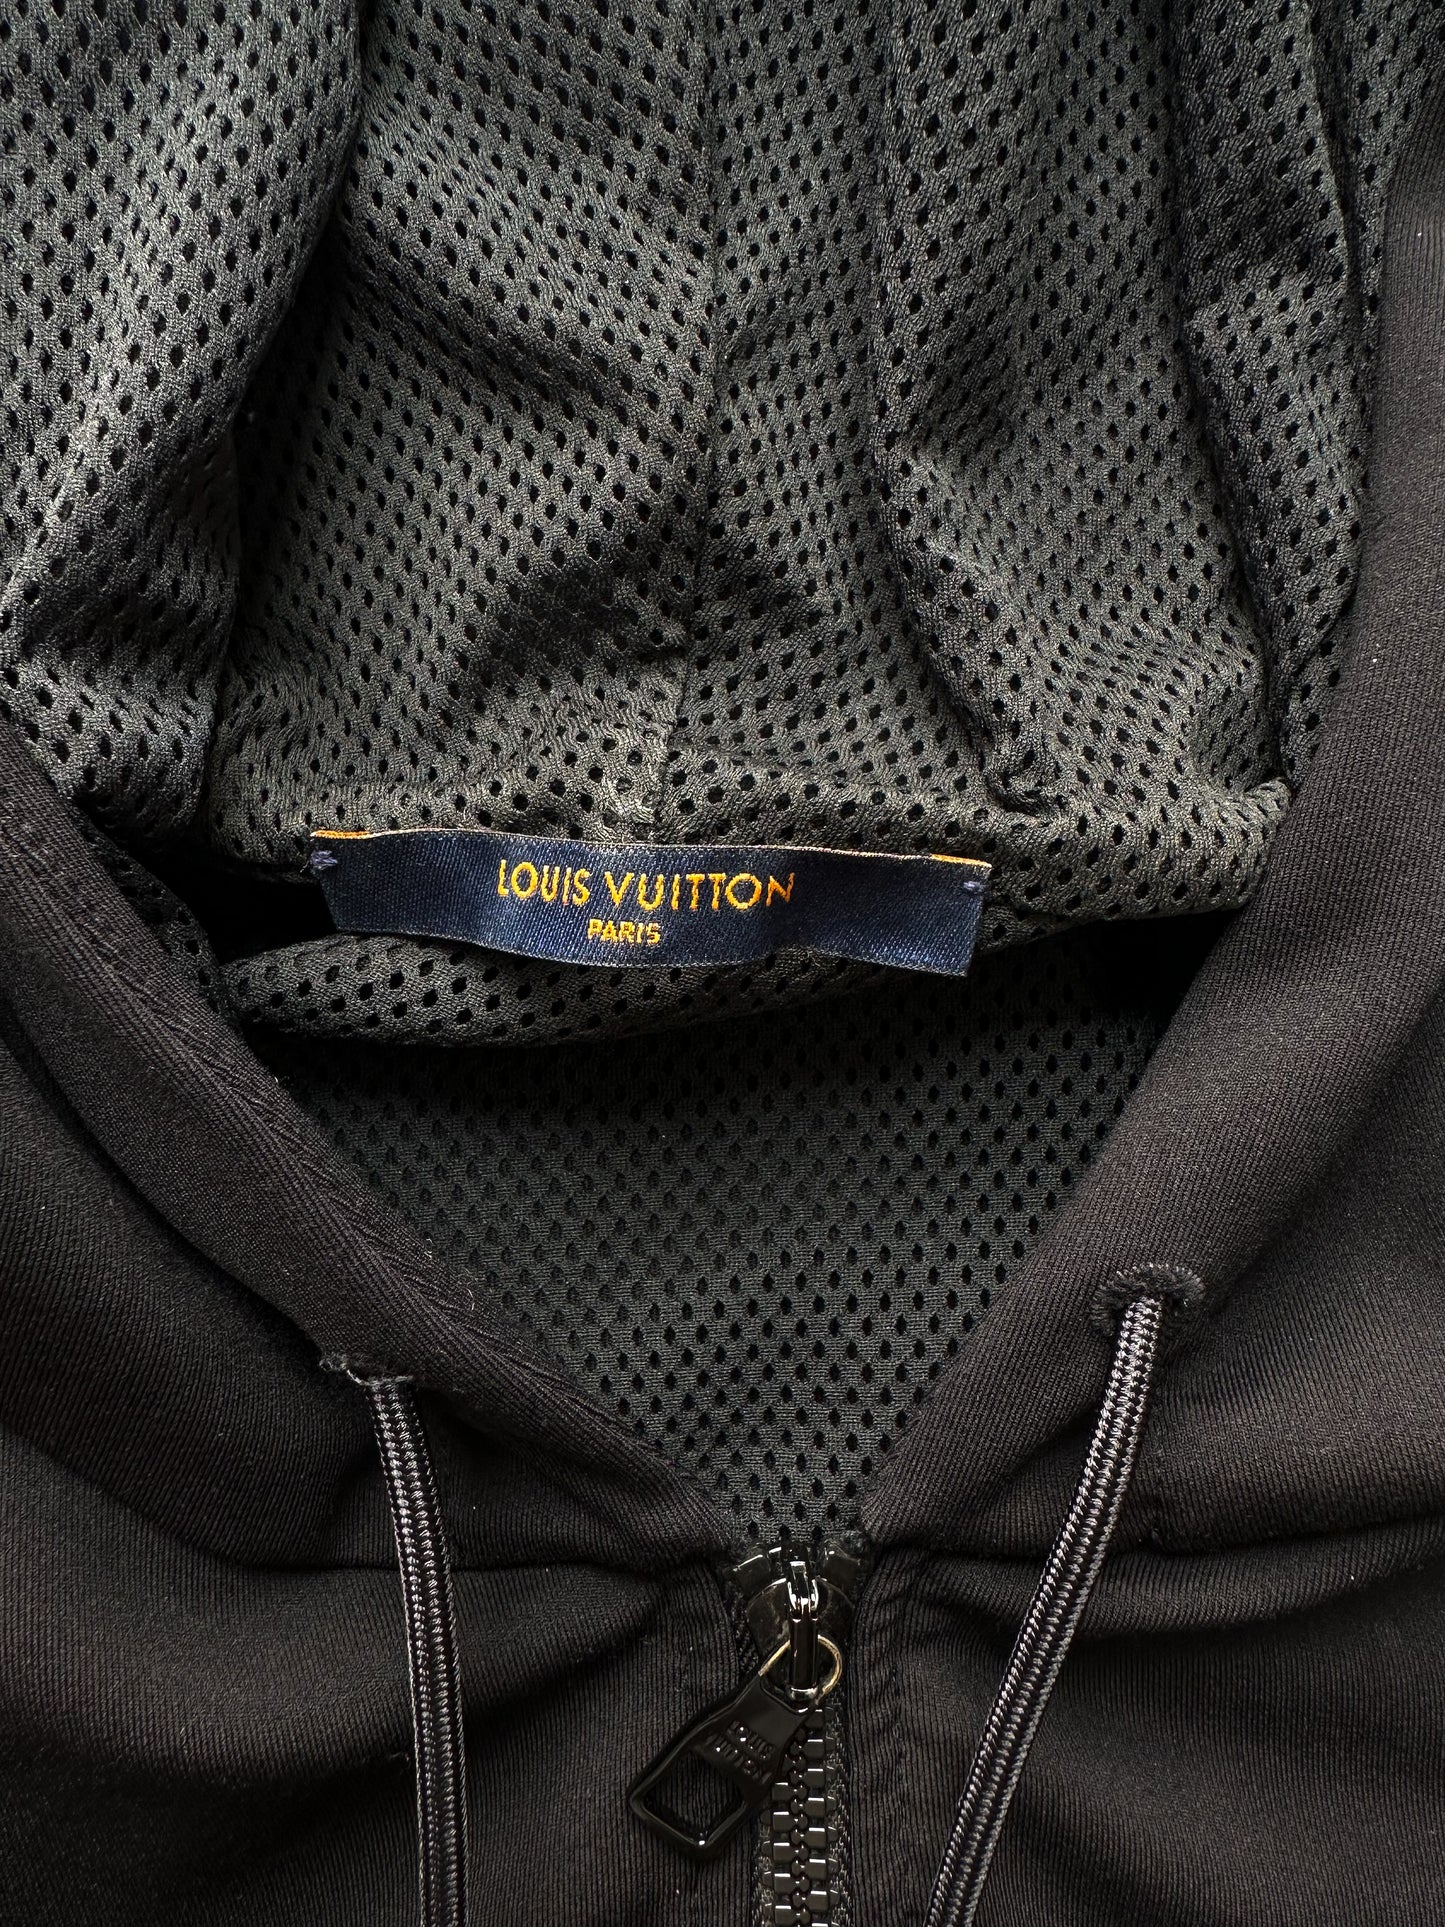 Louis Vuitton Damier Graphite Sweatshirt - Size M